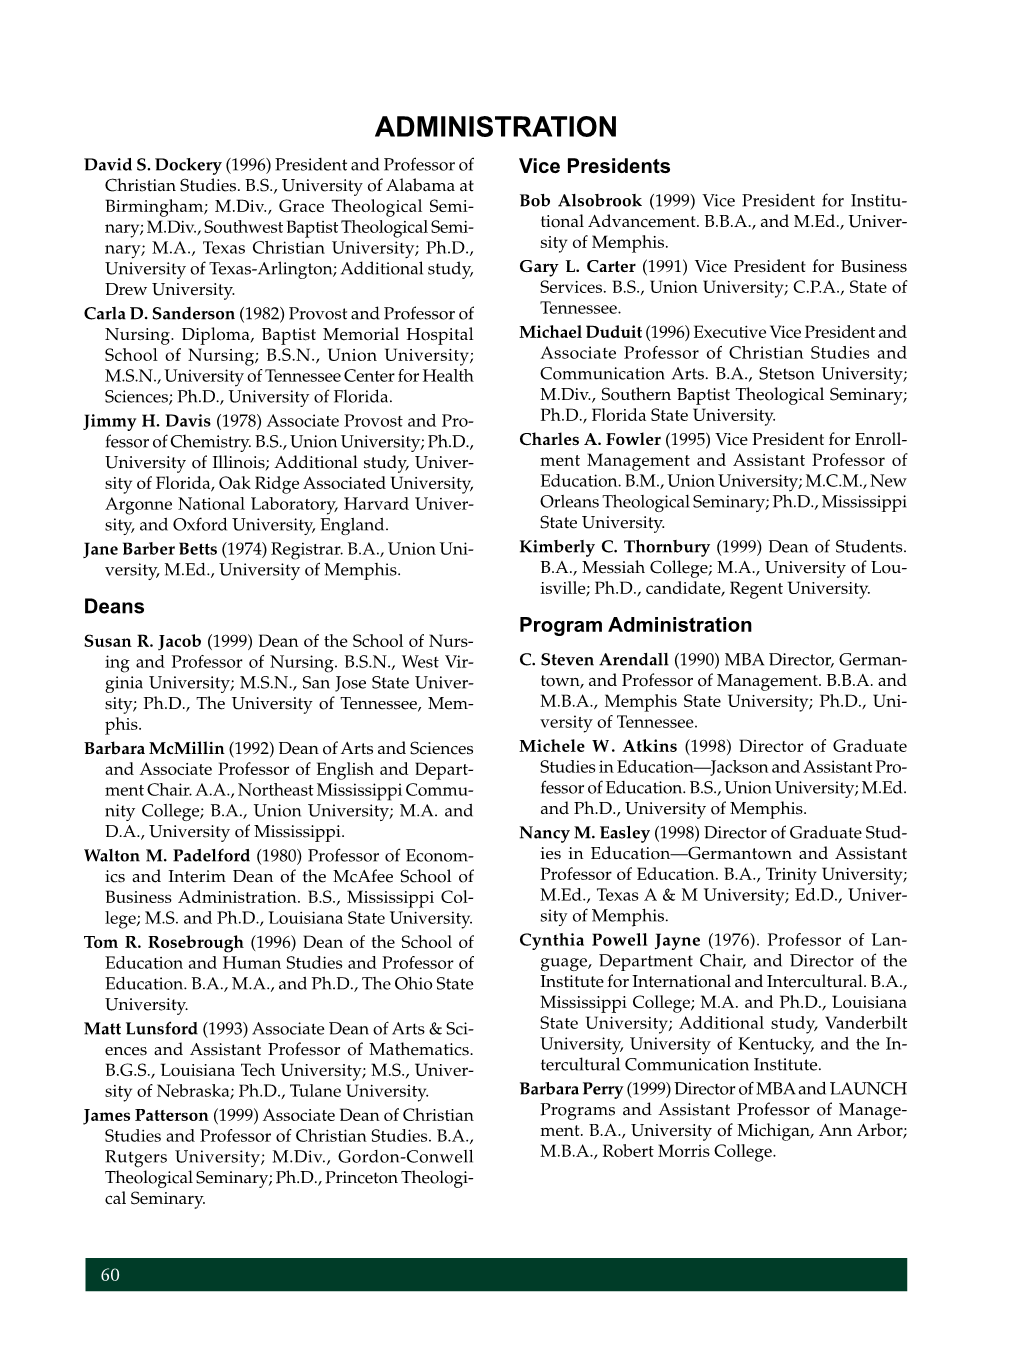 Graduate Catalogue 2001